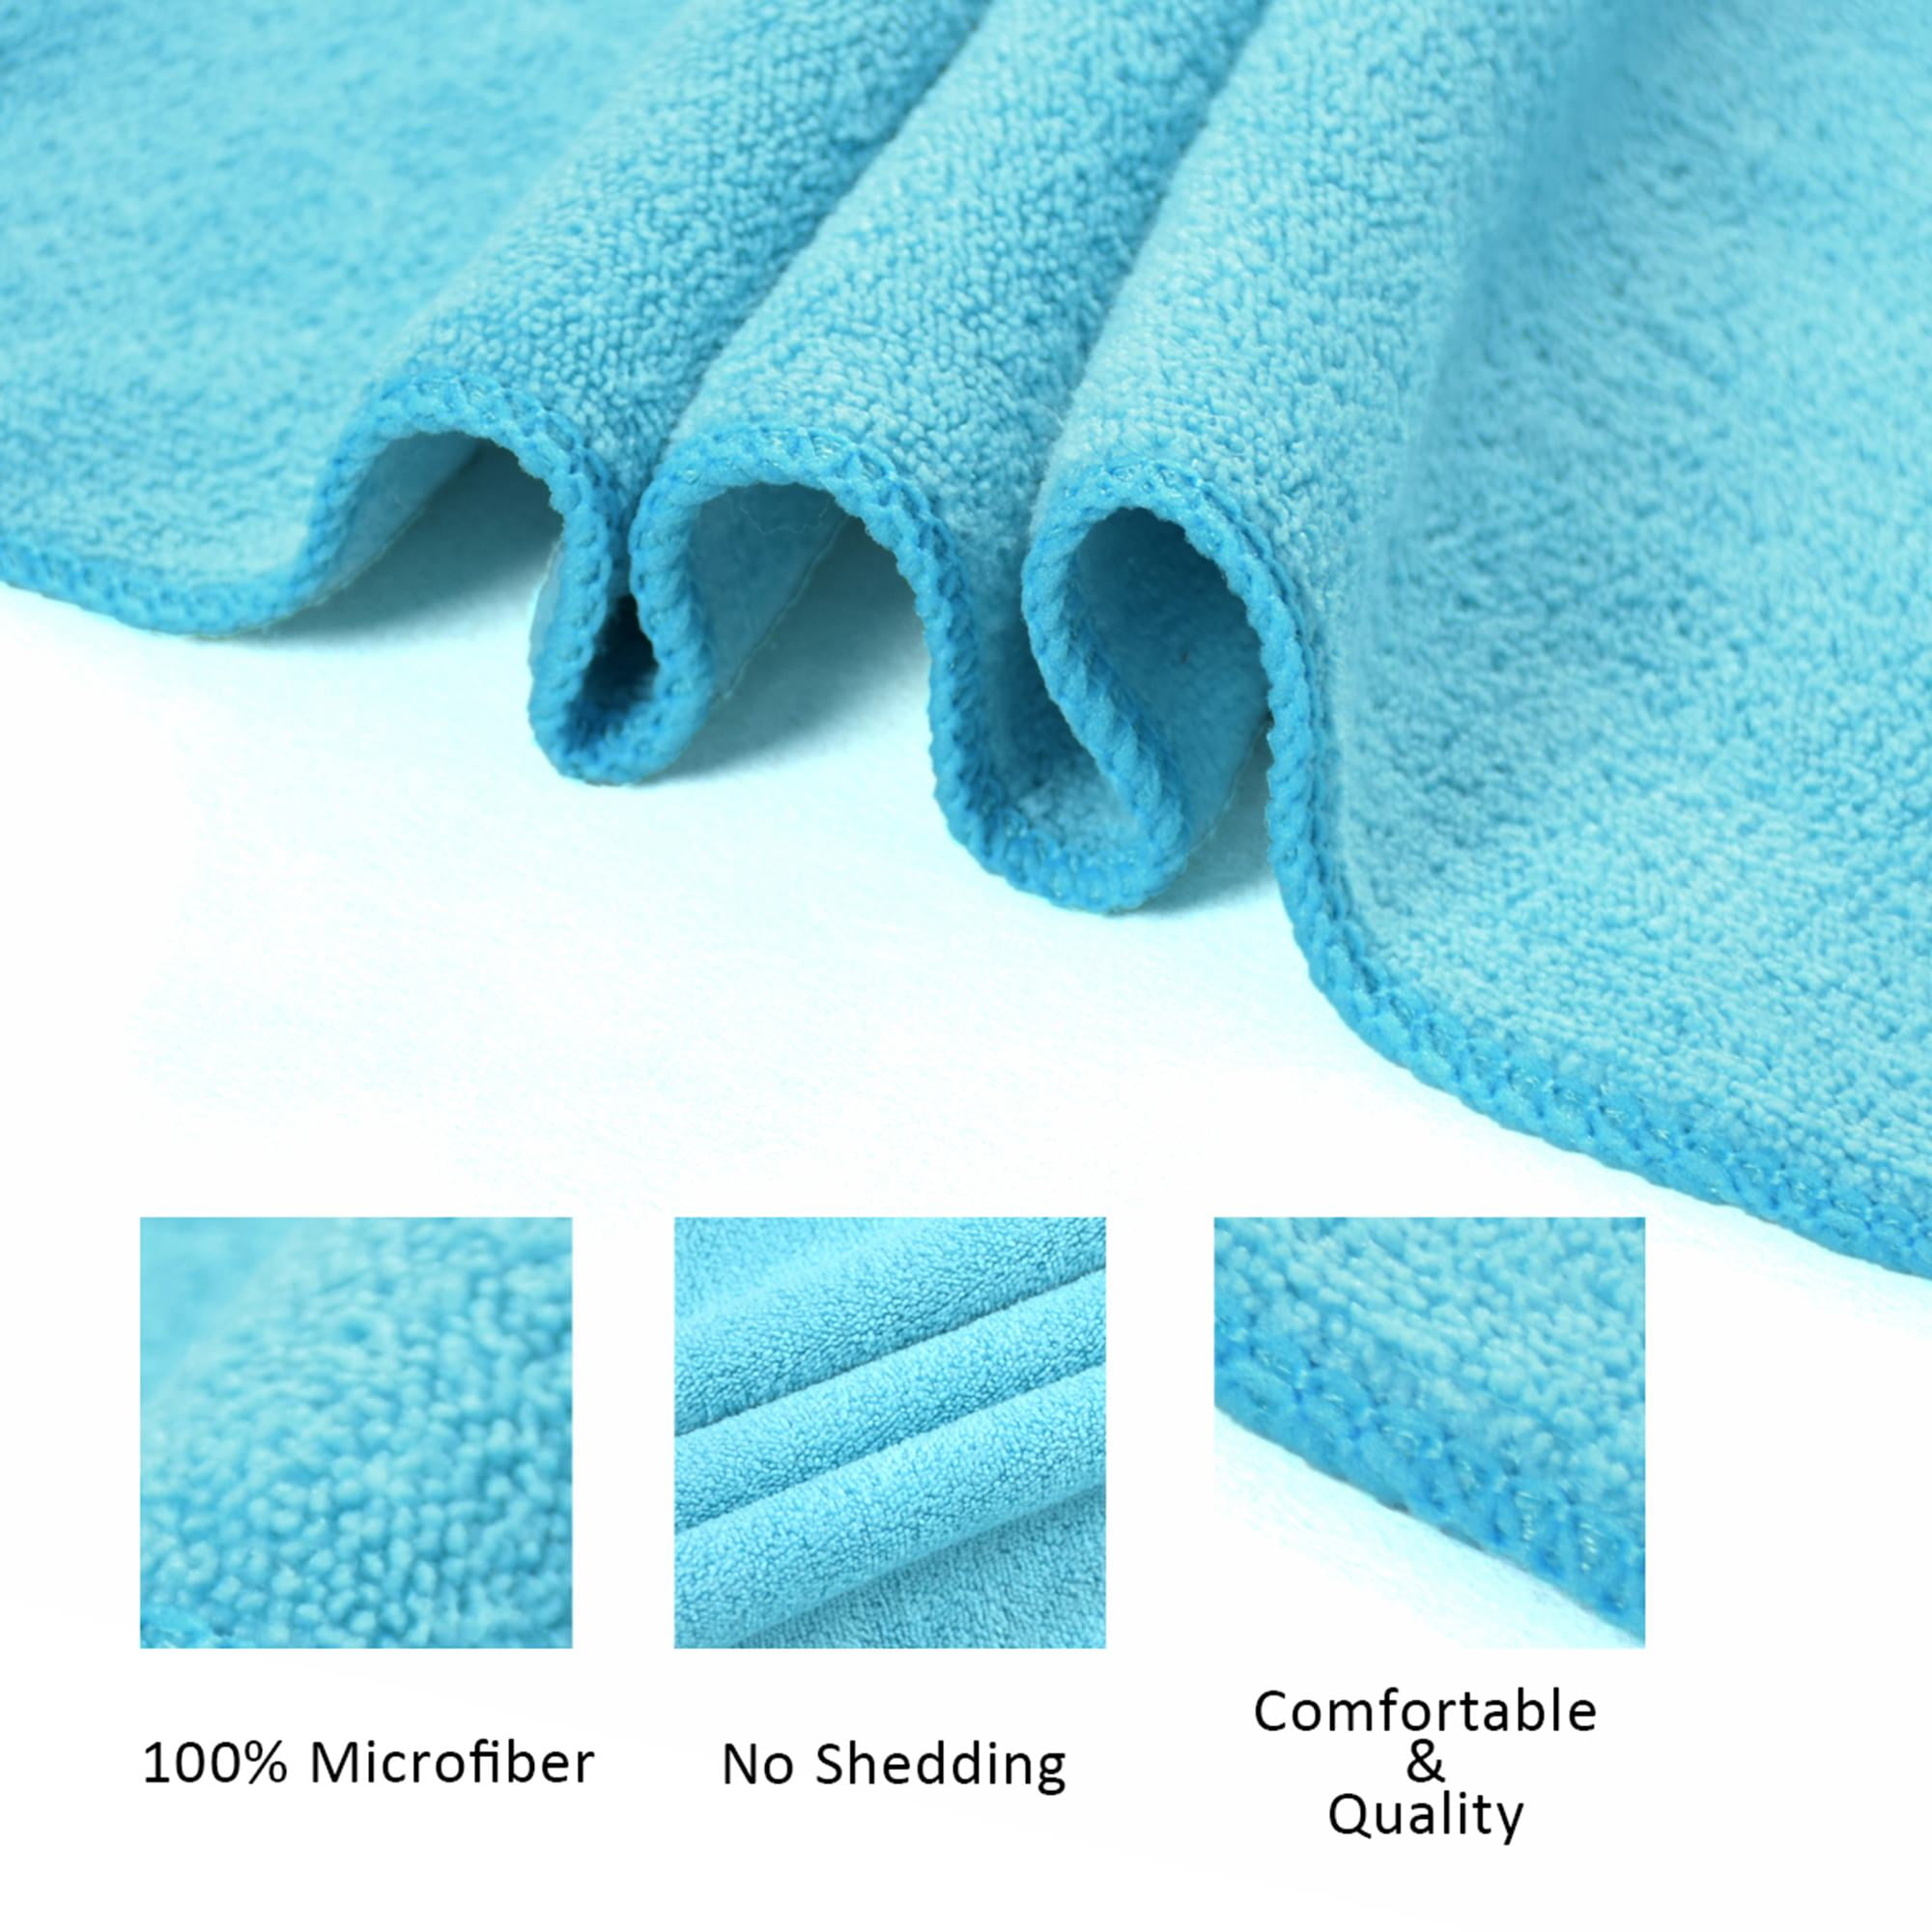 JML Bath Towel (6 Pack, 27 x 55) - Super Absorbent, Fast Drying,  Multipurpose for Bath, Swimming, Fitness, Sports, Yoga